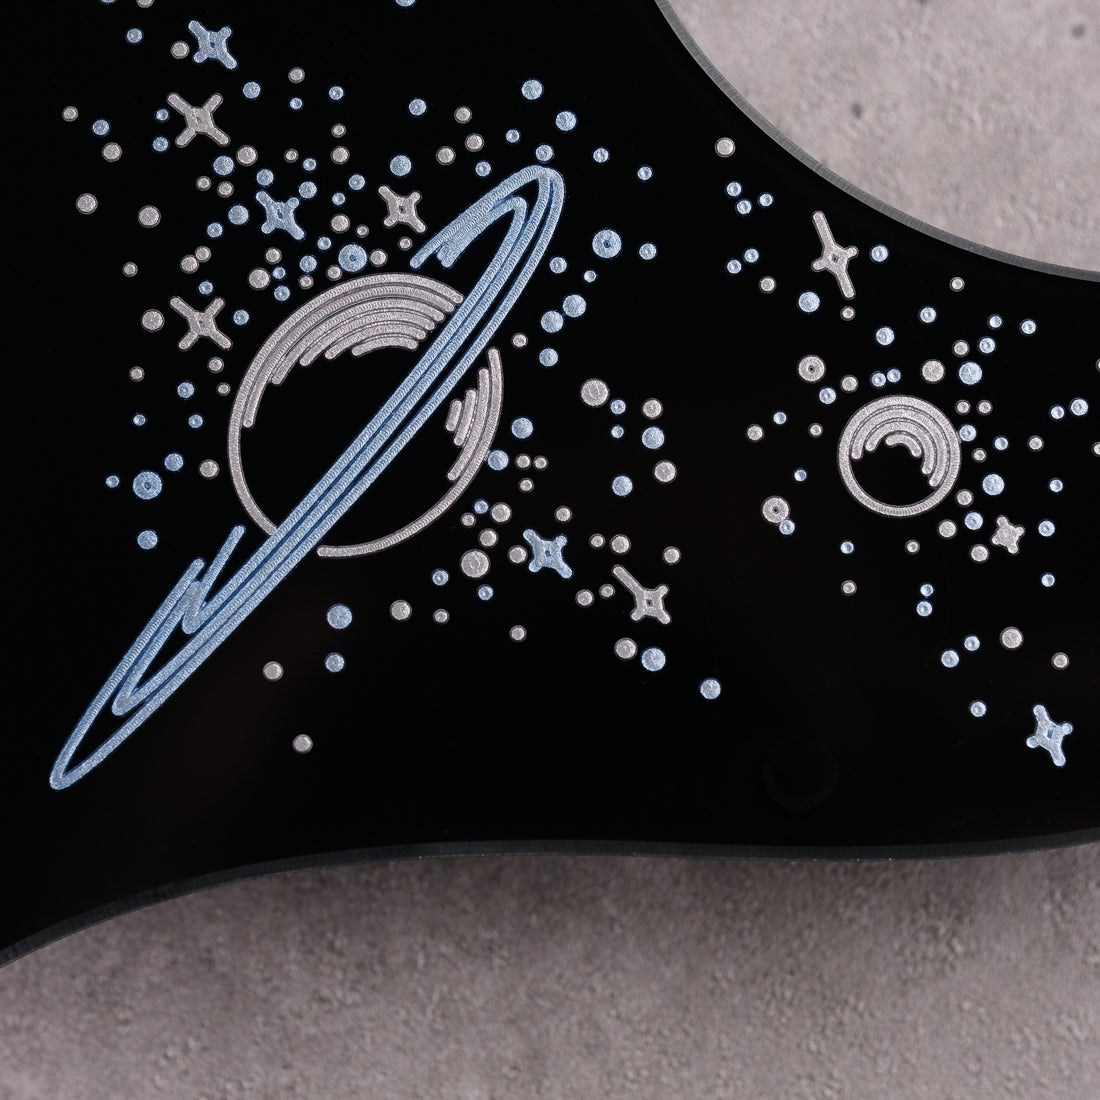 Space Oddity - Jazzmaster Pickguard - Black